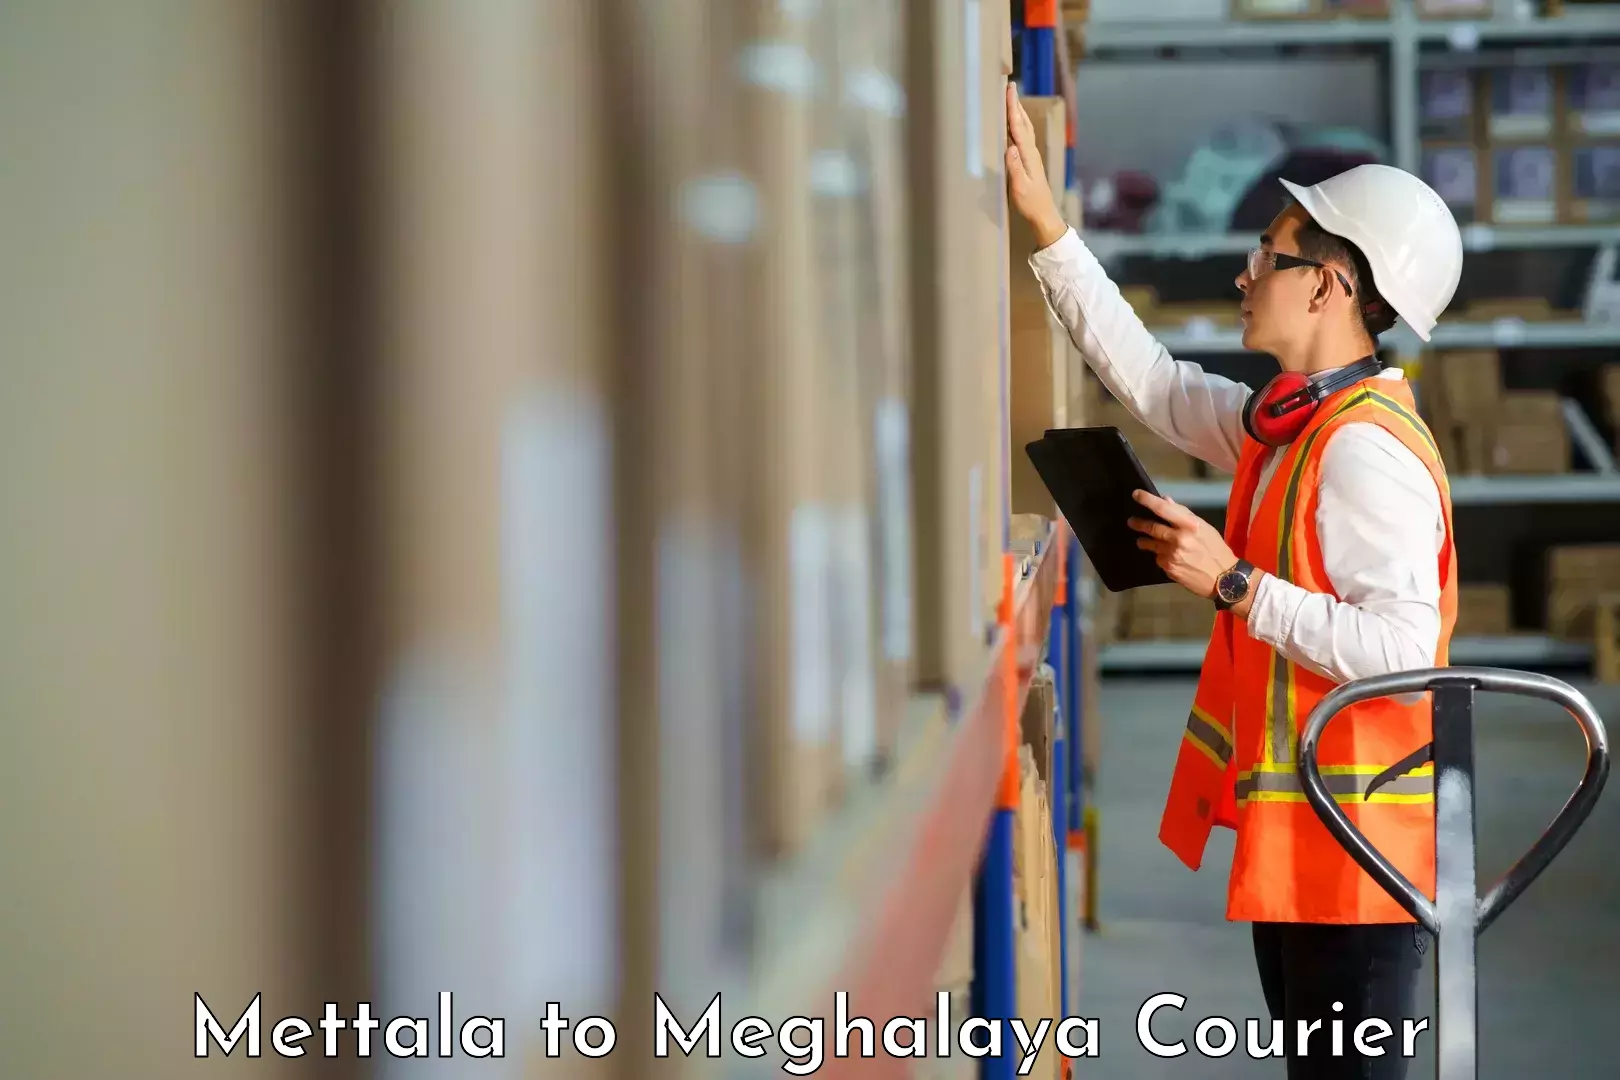 Courier service partnerships Mettala to Meghalaya